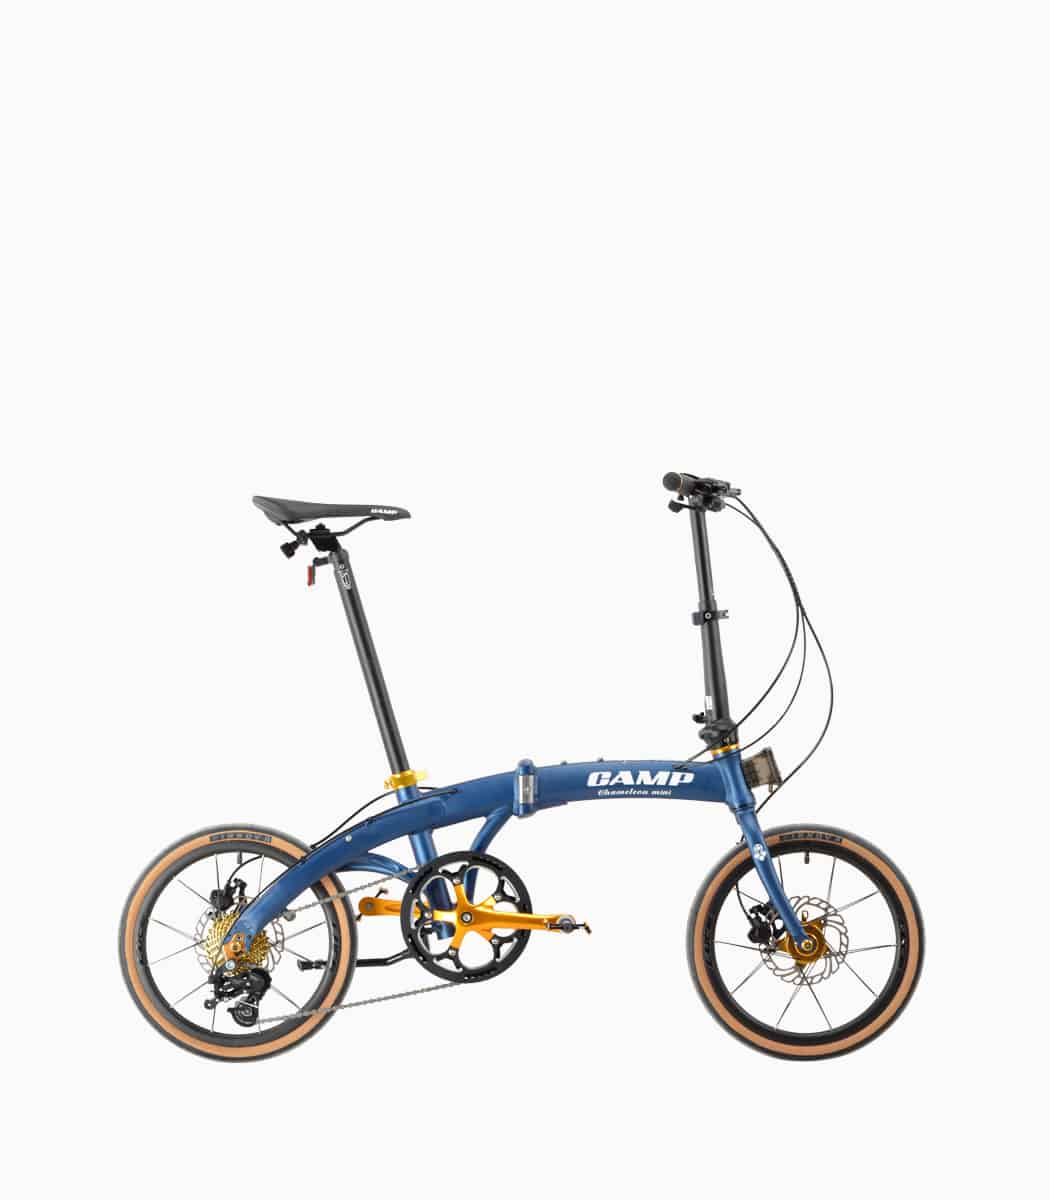 CAMP CHAMELEON Mini (MATT BLUE) foldable bicycle right